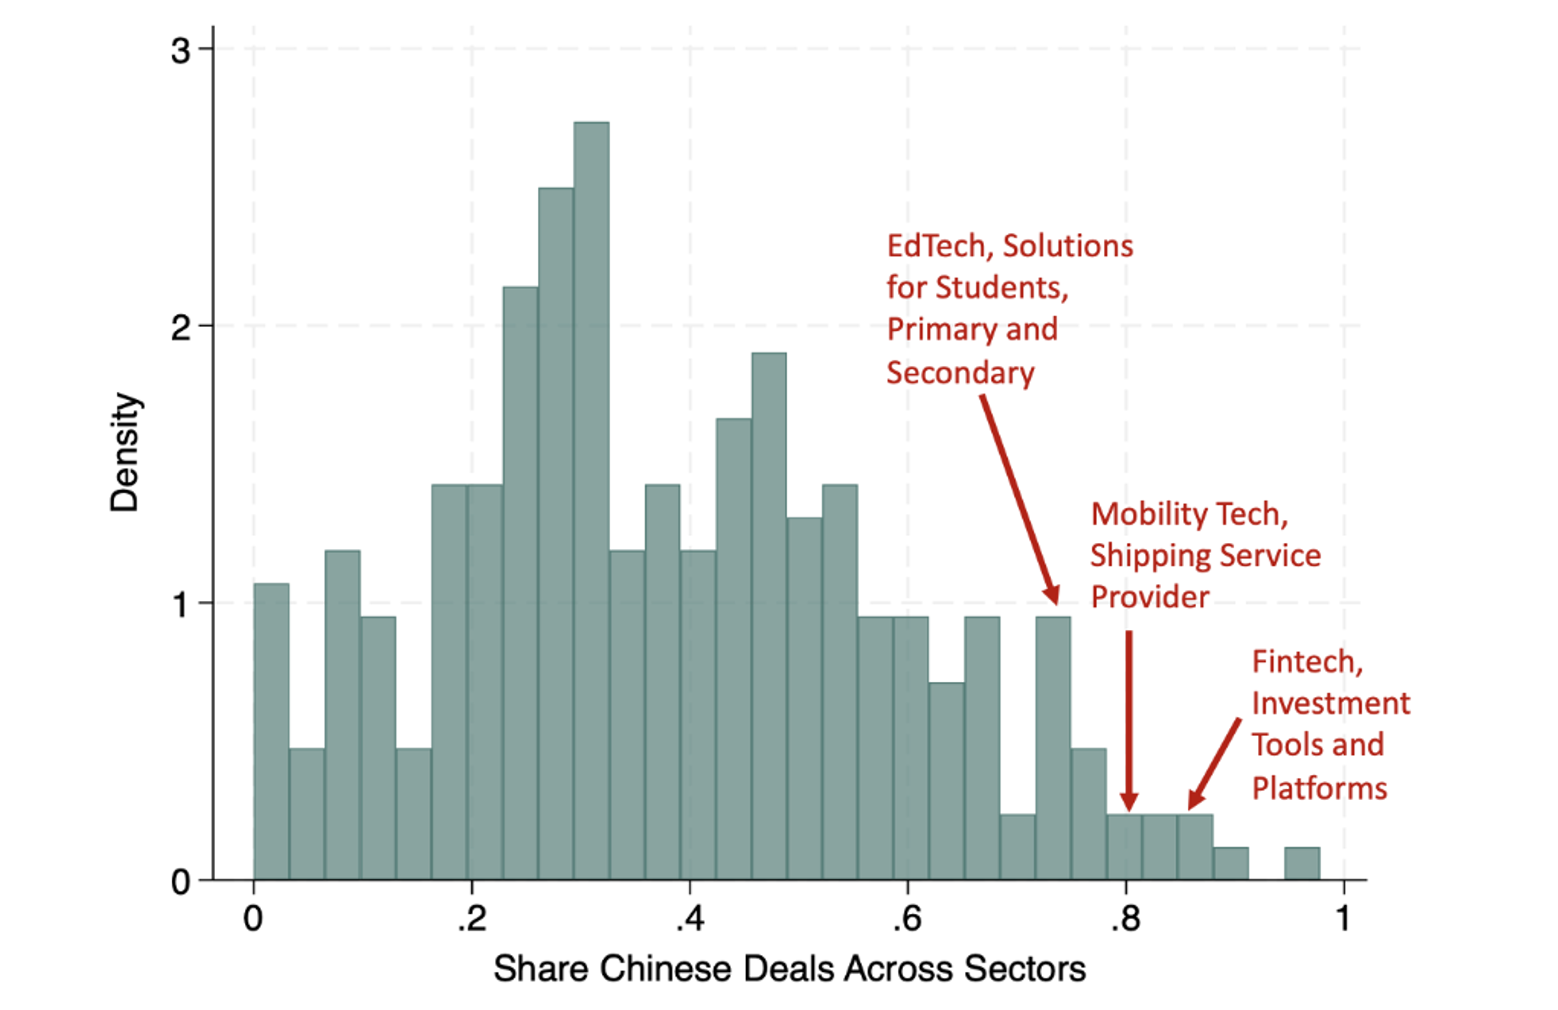 Figure 1 China’s share of venture deals across sectors